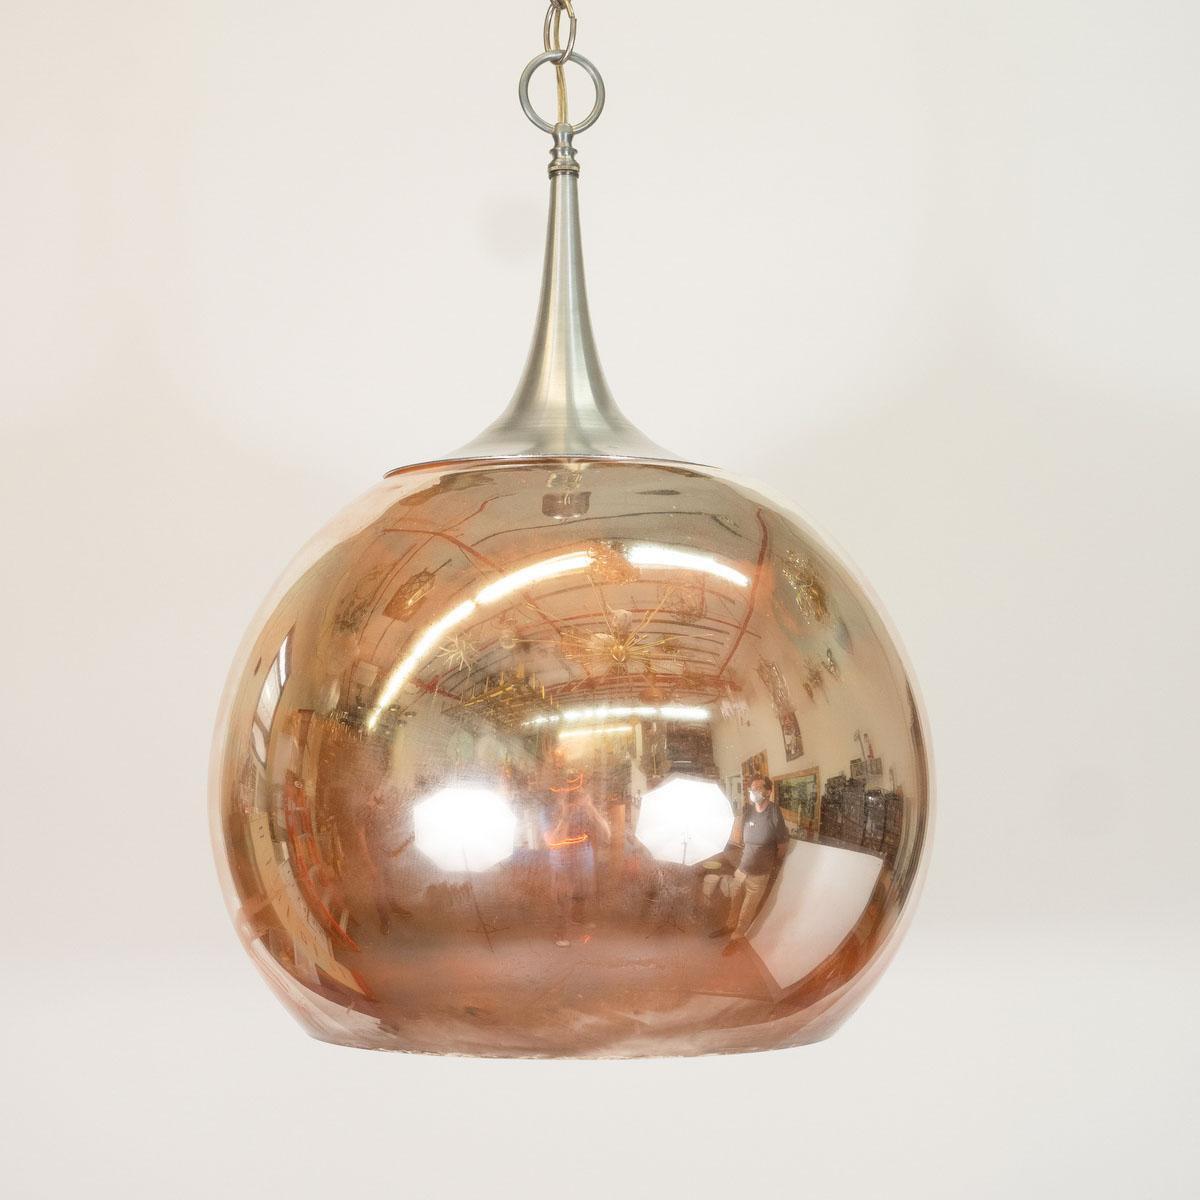 Space-Age Mercury Glass Pendant For Sale 6